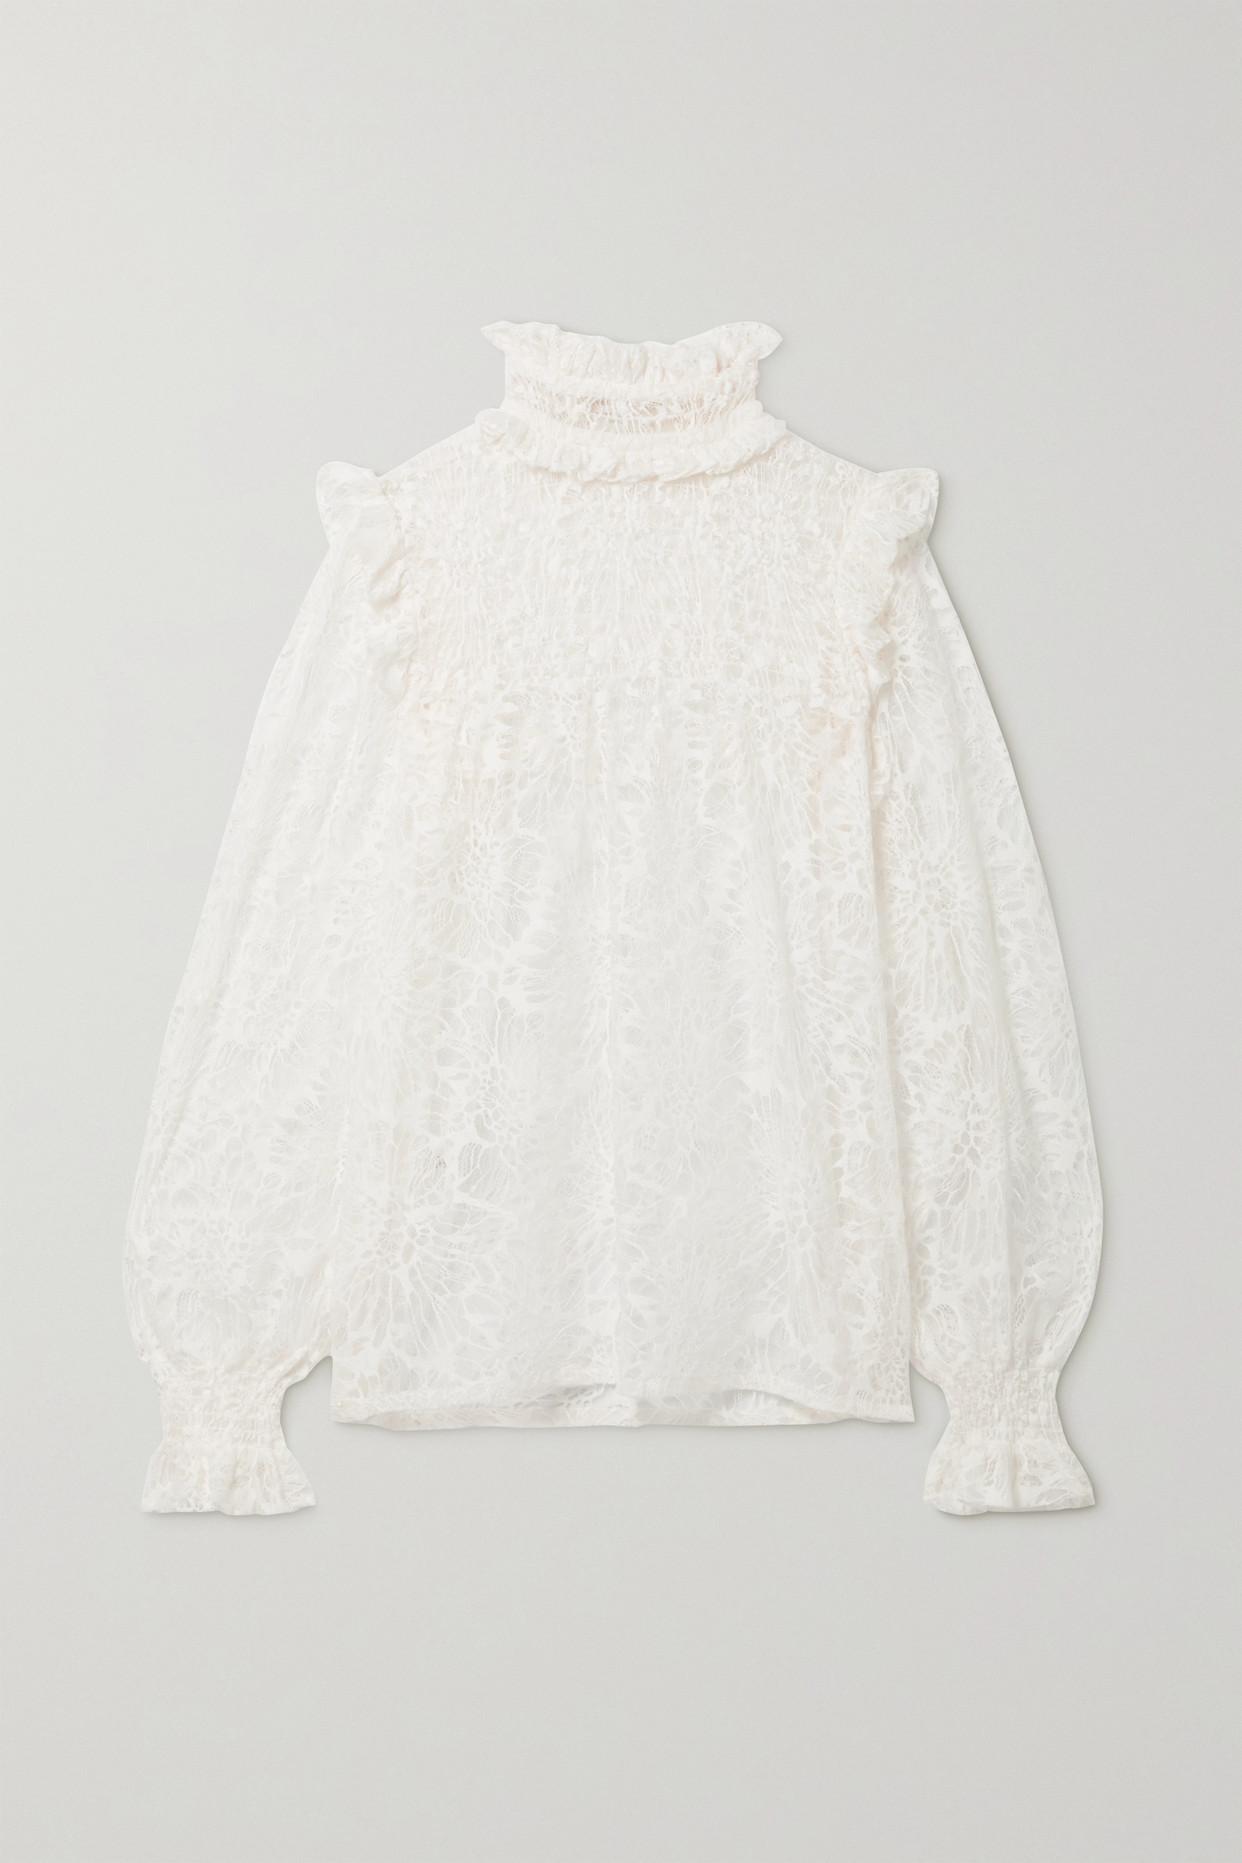 Romantic white lace midi dress for spring, Saint Laurent matelasse monogram chain  wallet blanc - Meagan's Moda